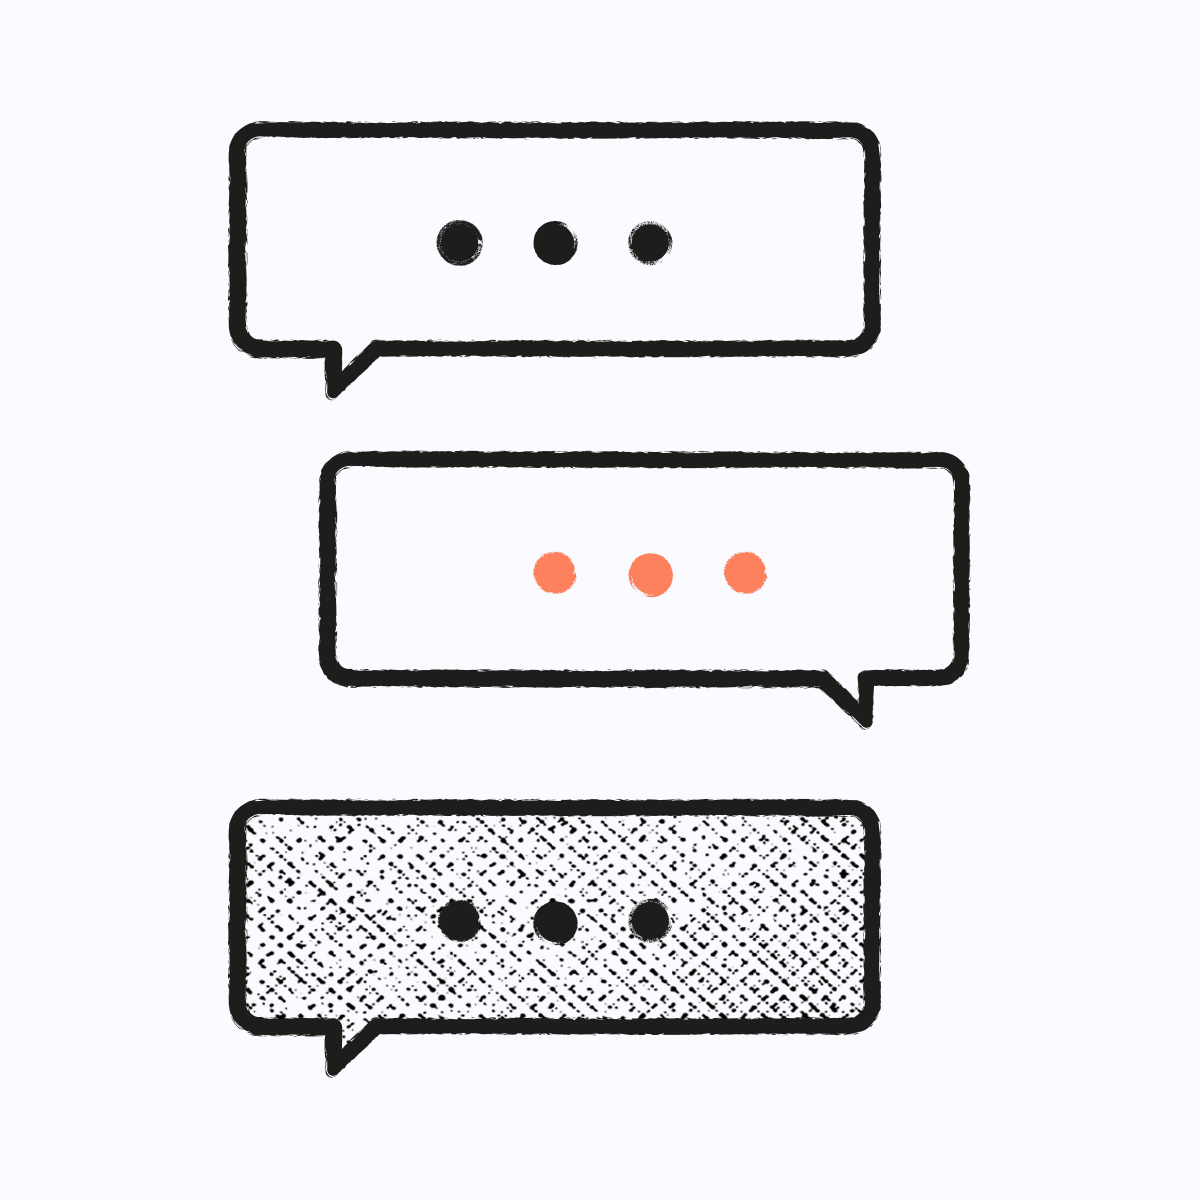 Illustration of text speech bubbles